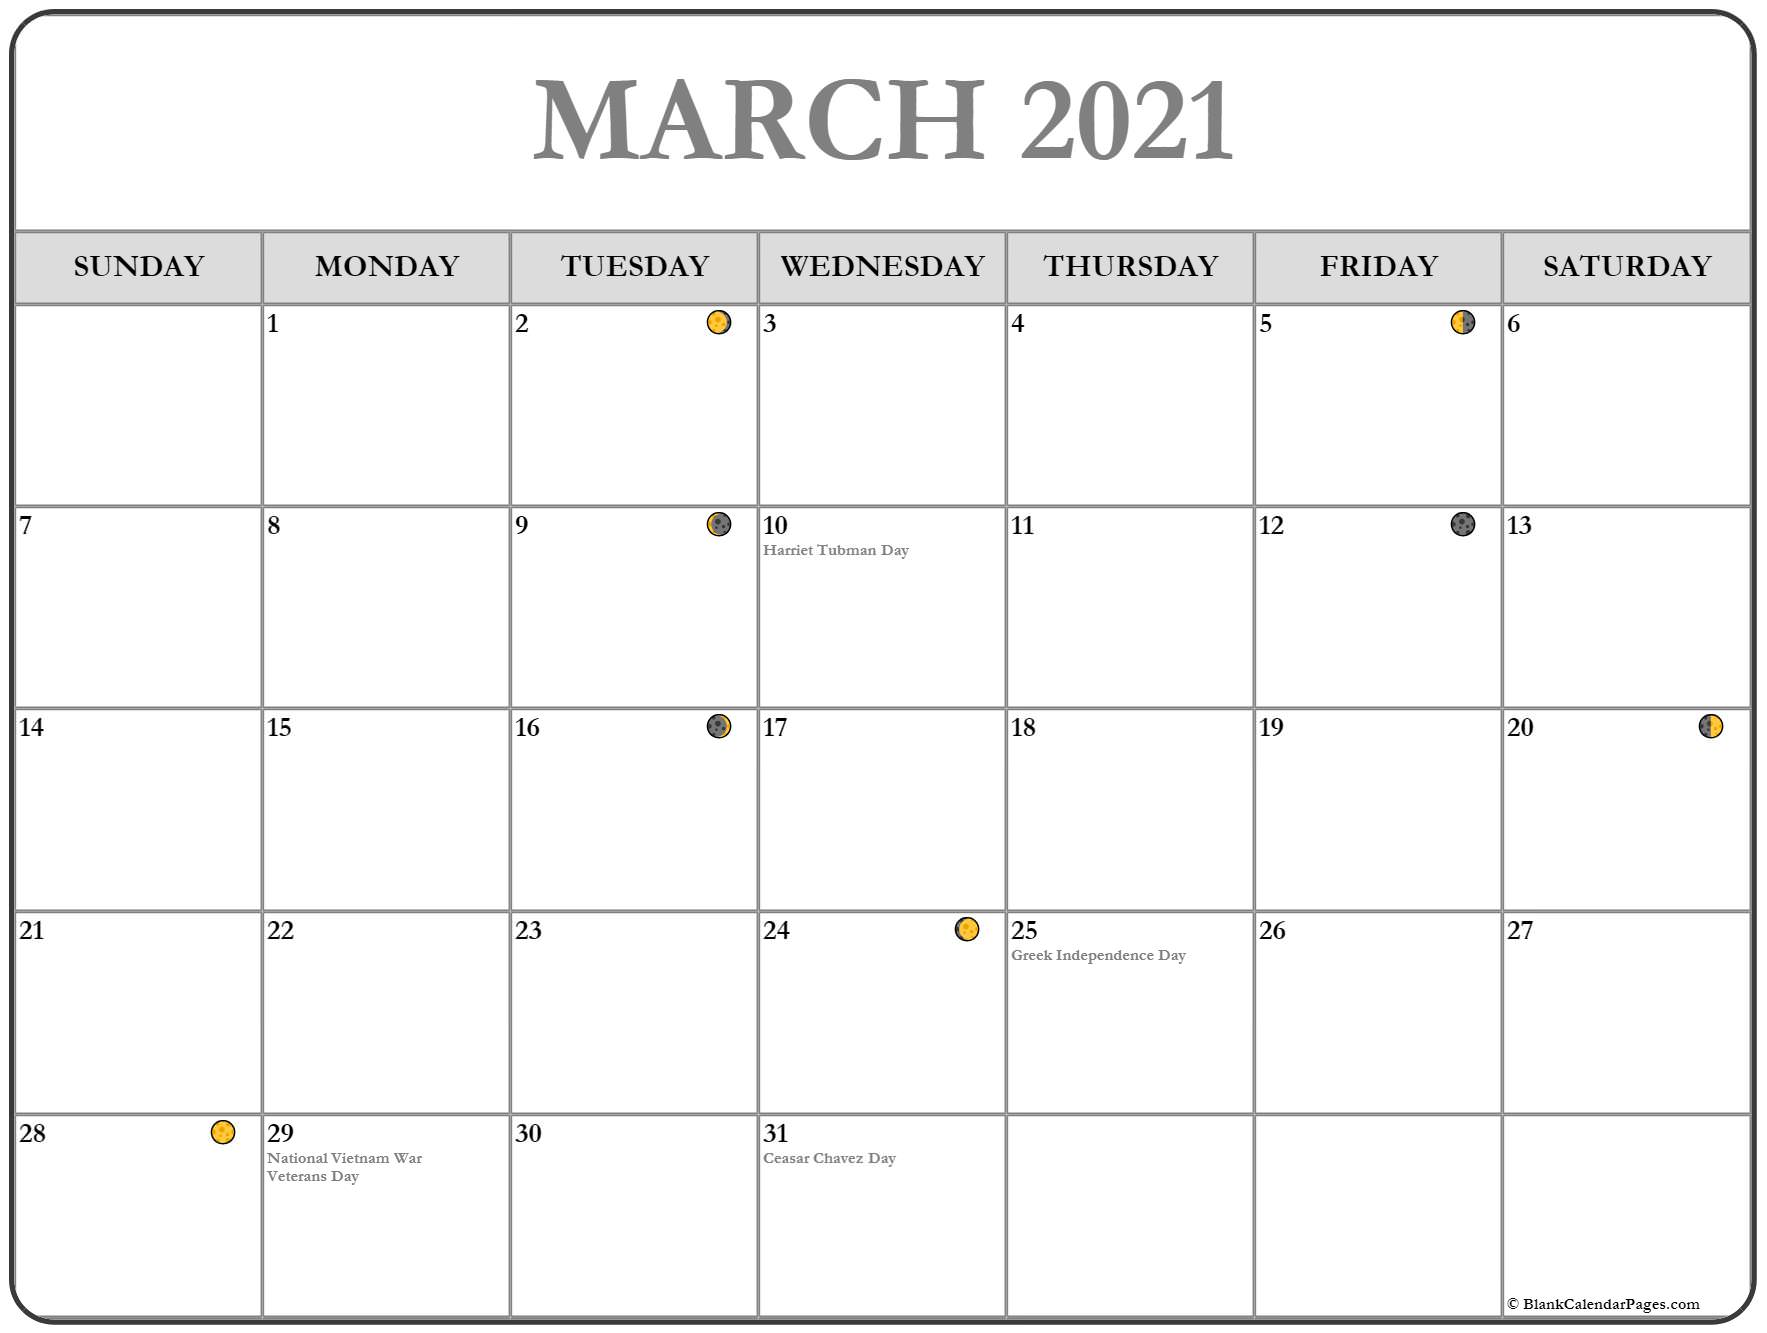 March 2021 Lunar Calendar